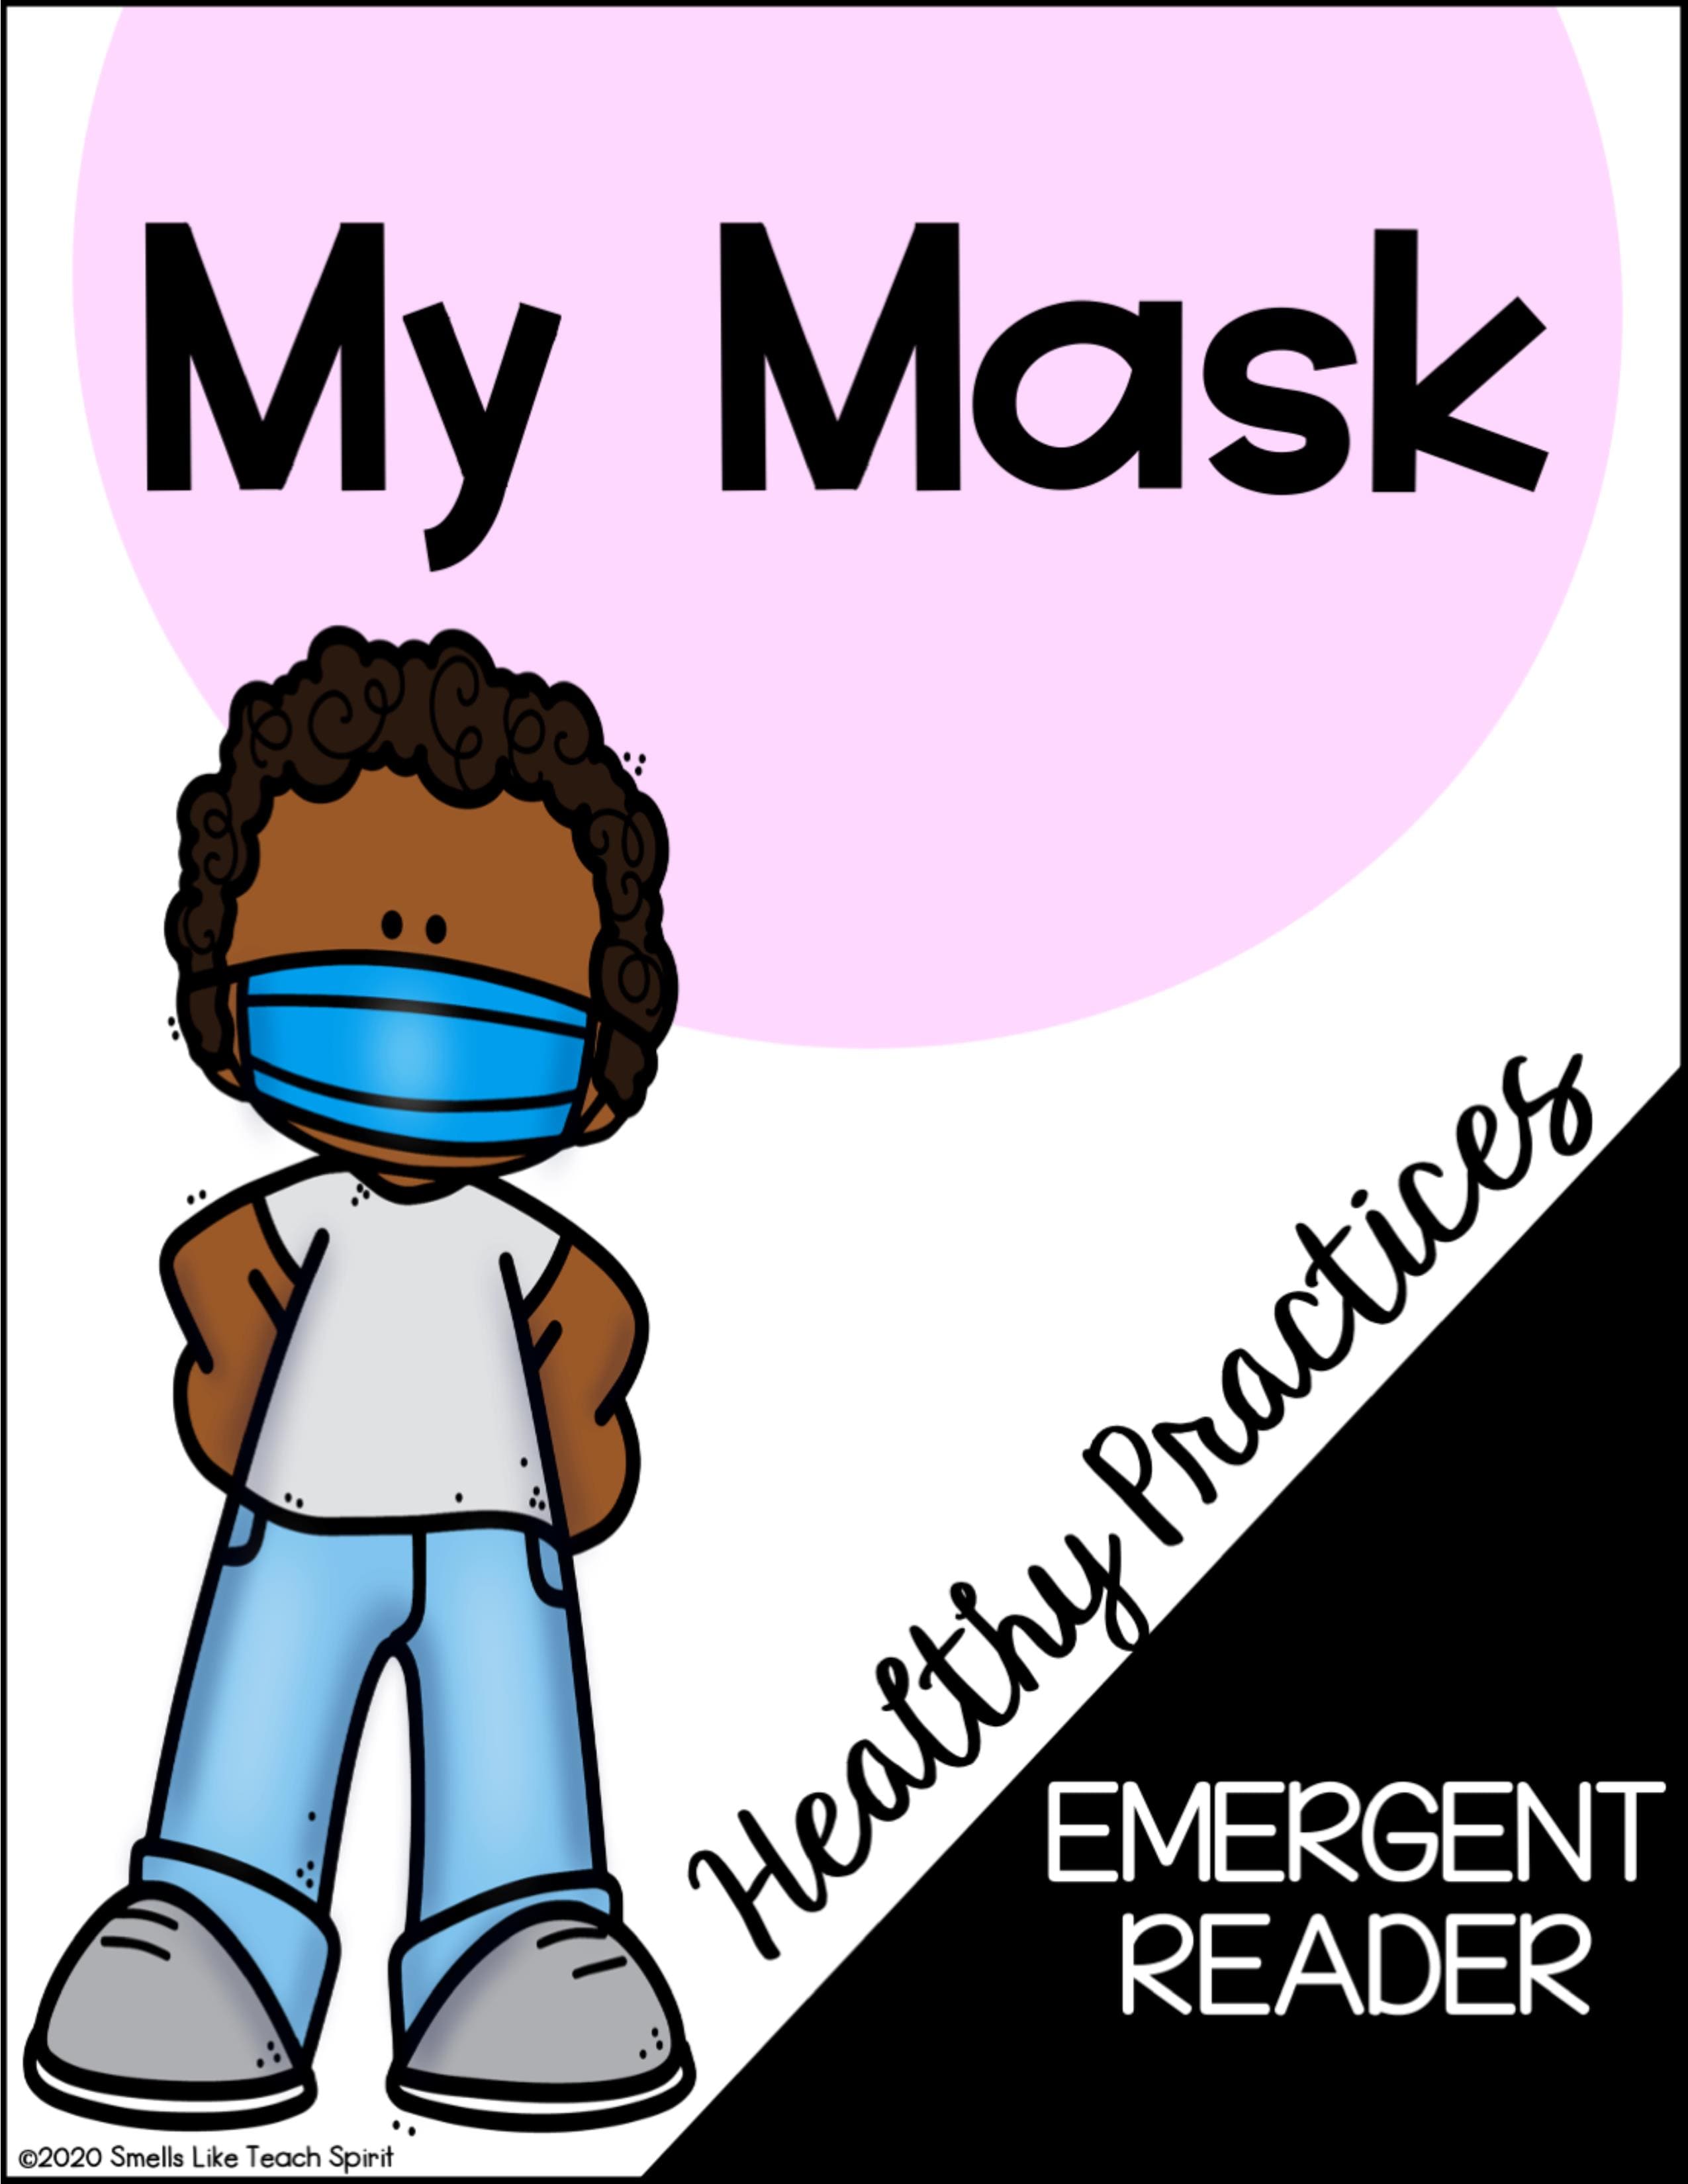 My Mask Healthy practice emergent reader